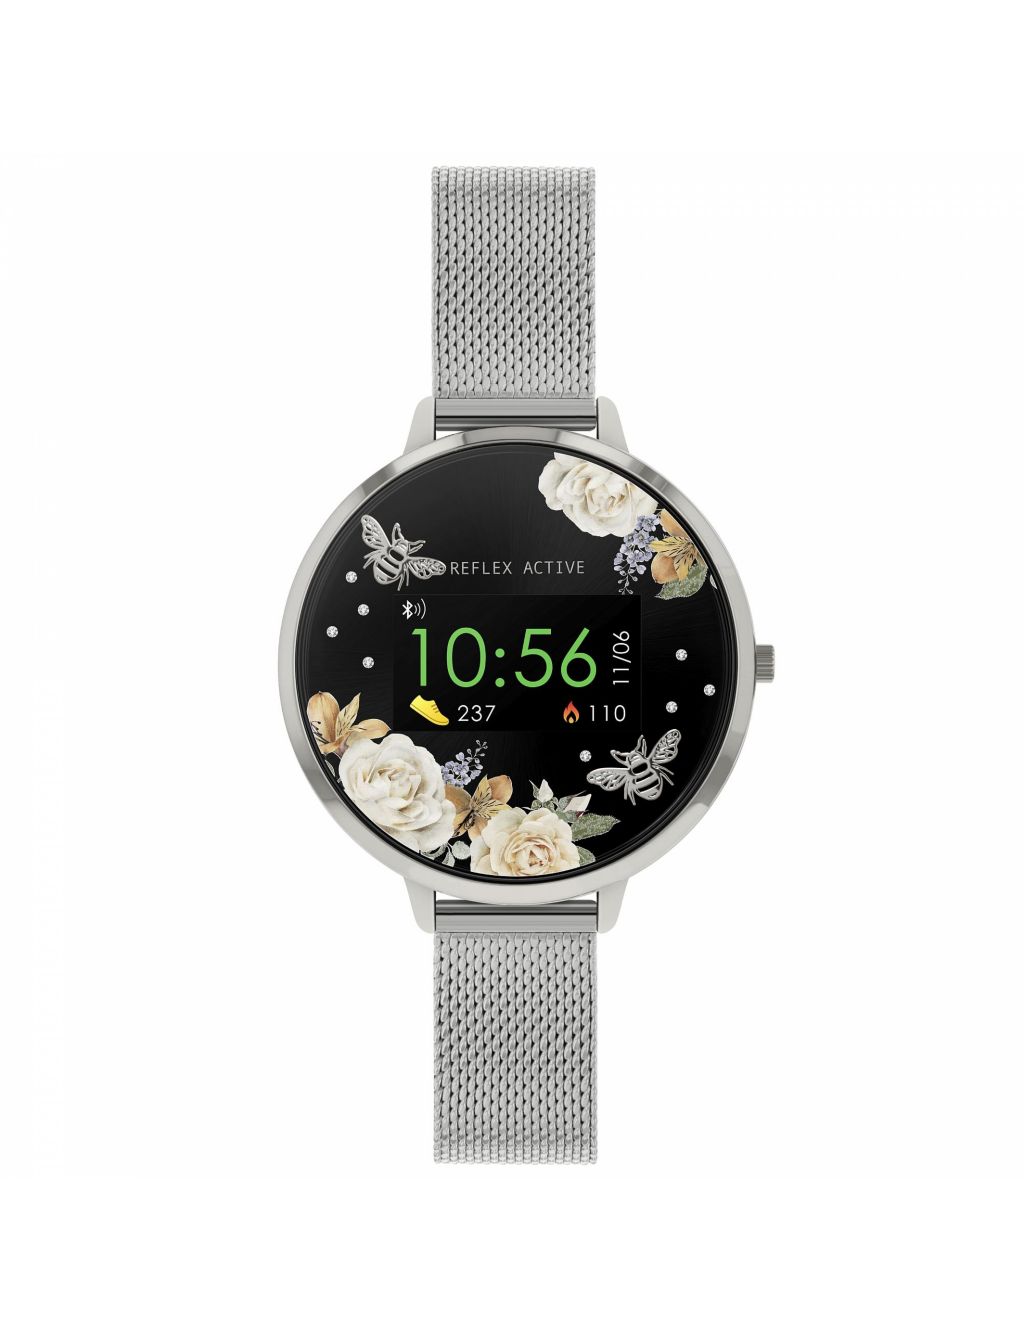 Reflex Active Bluetooth Stainless Steel Smartwatch image 1